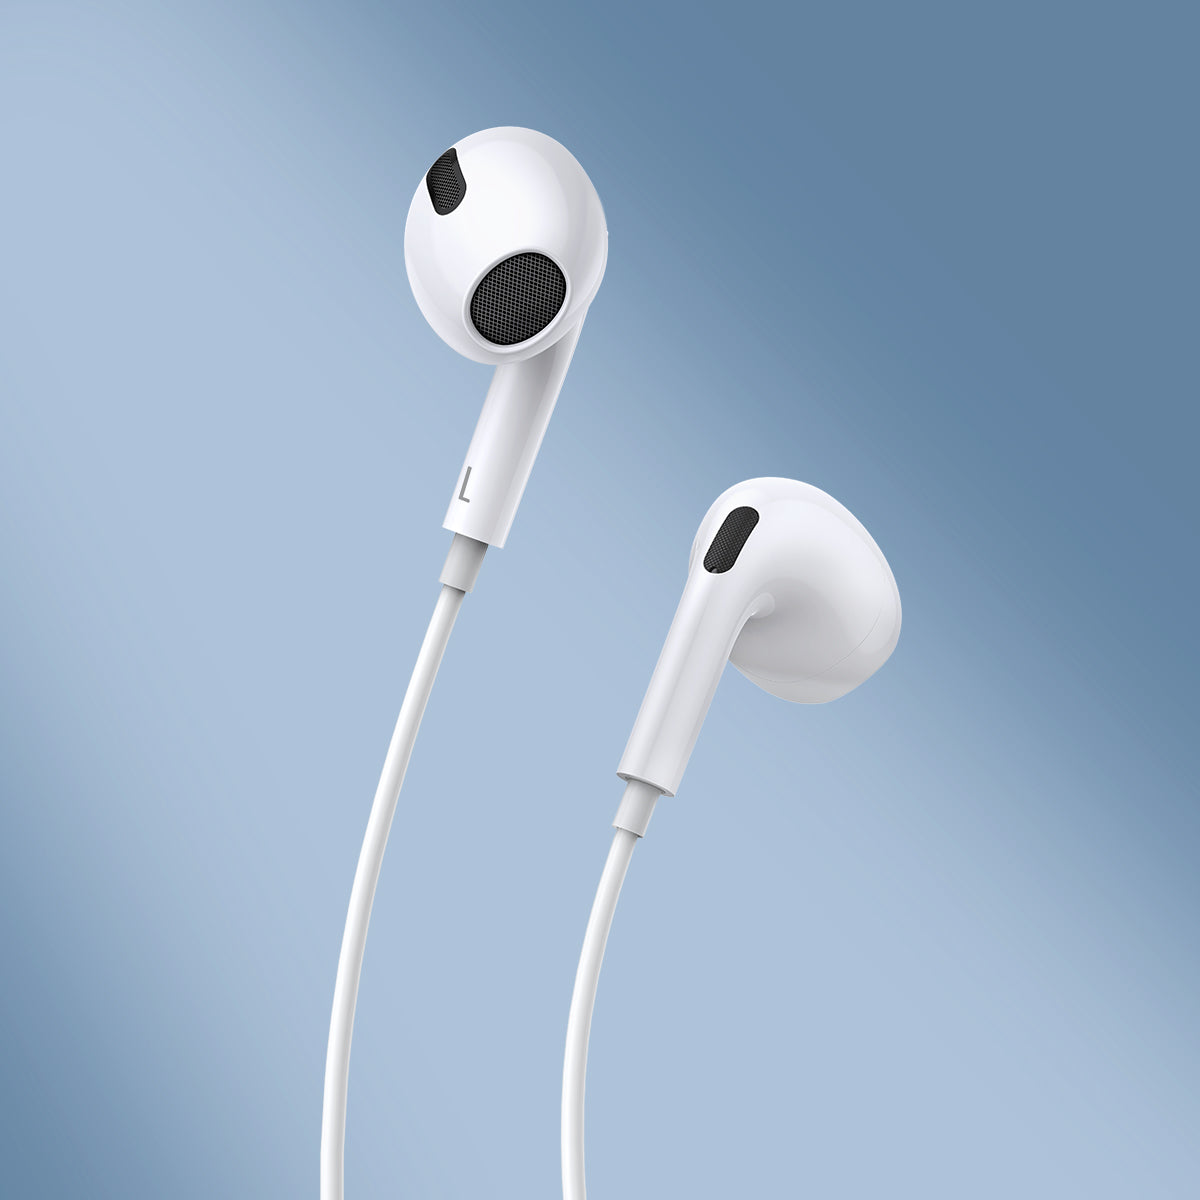 3.5mm lateral in-ear Wired Earphone